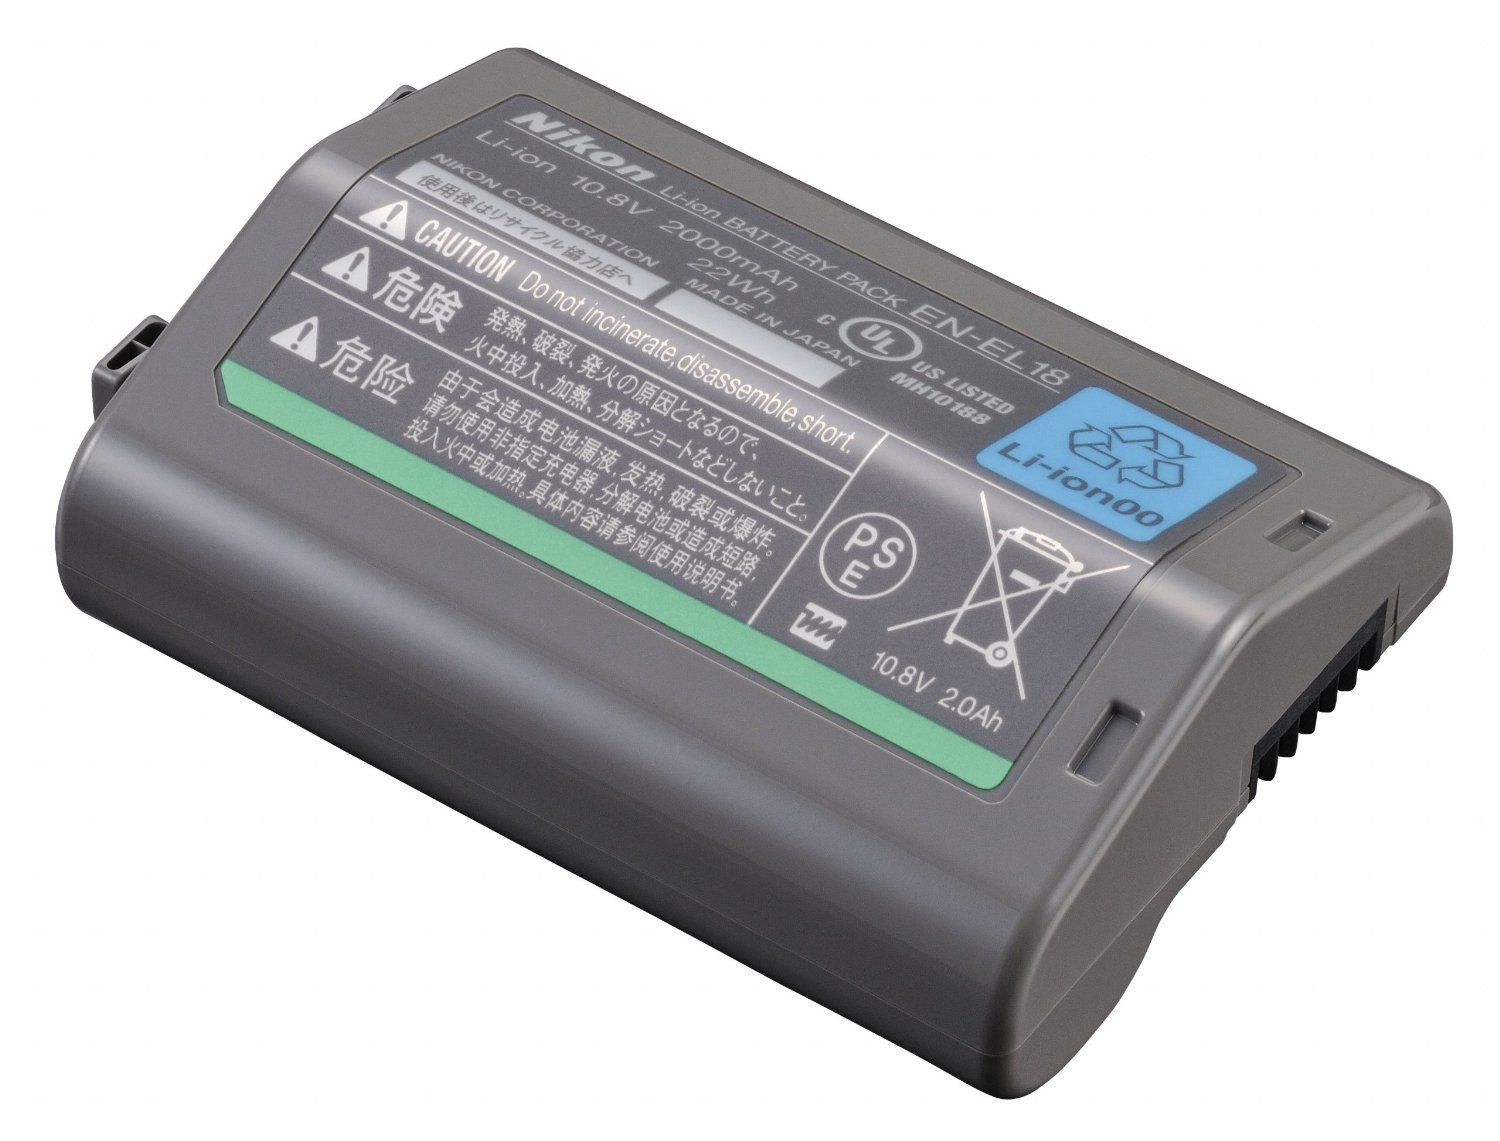 Nikon EN-EL18 Rechargeable Li-ion Battery for D4 Digital SLR